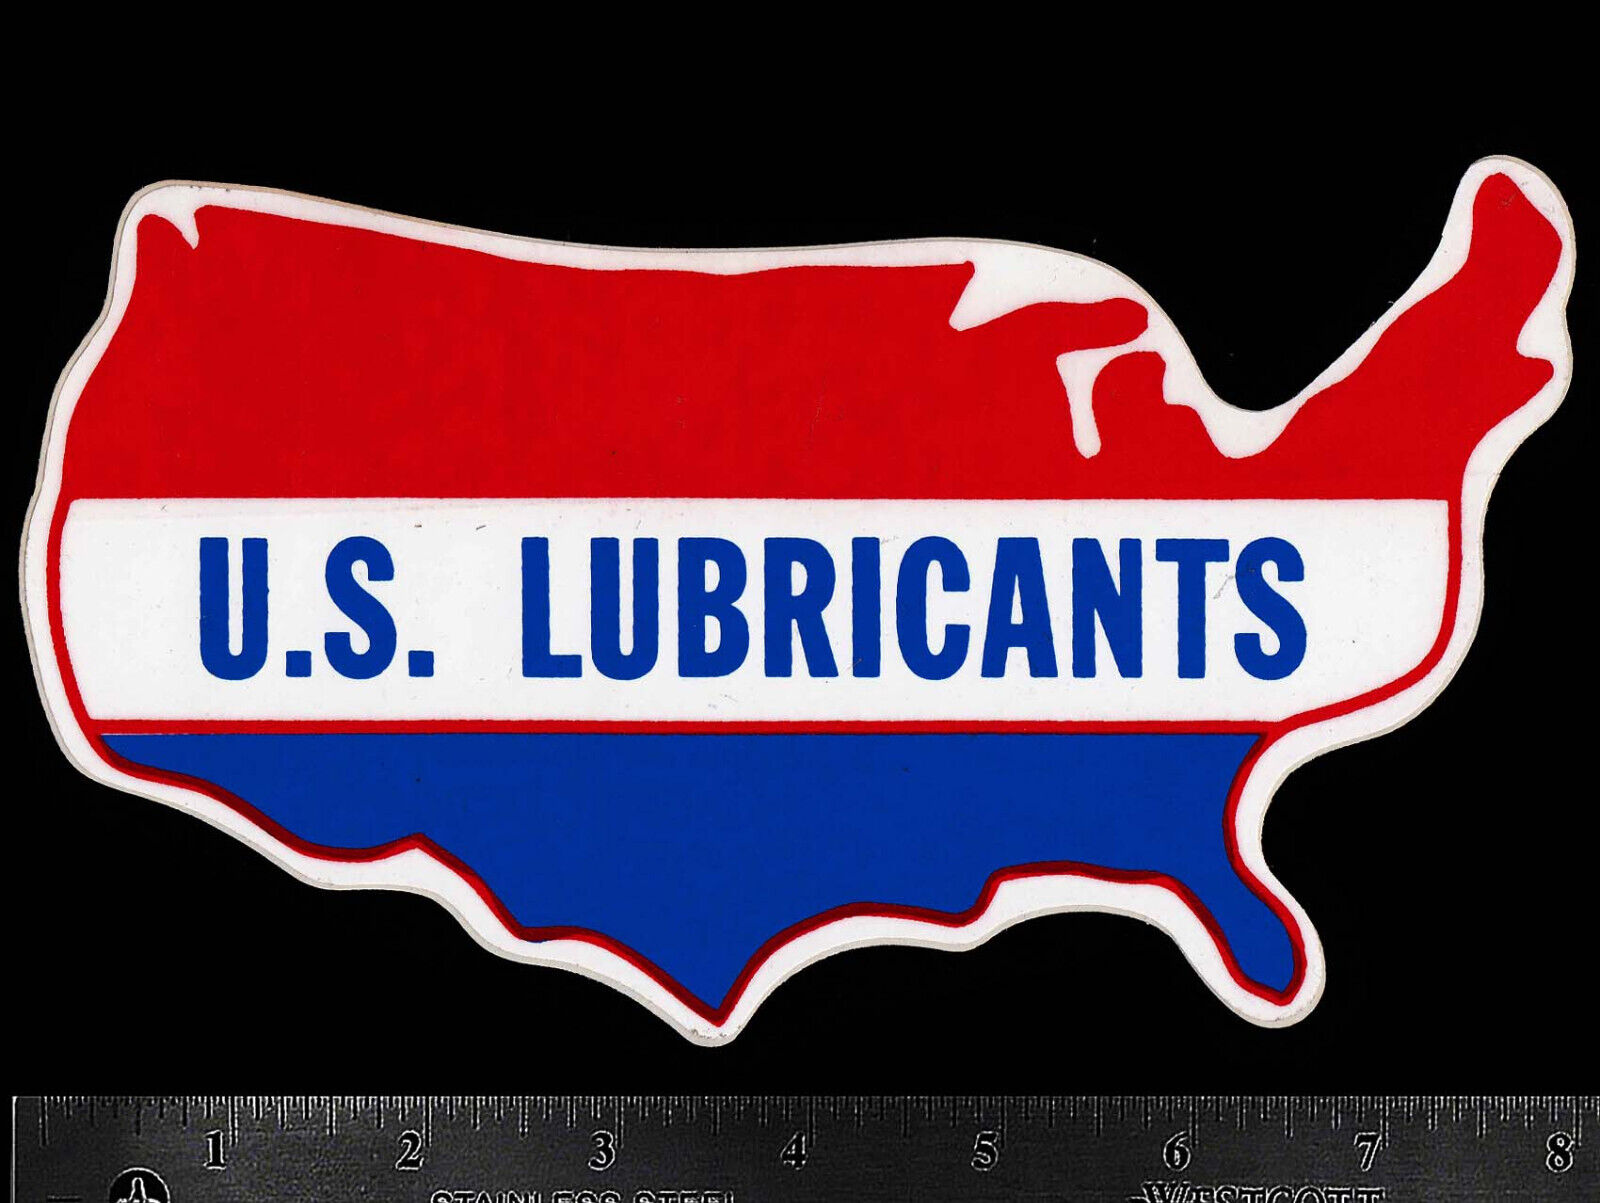 U.S. LUBRICANTS Motor Oil - Original Vintage 1960's 70's Racing Decal/Sticker